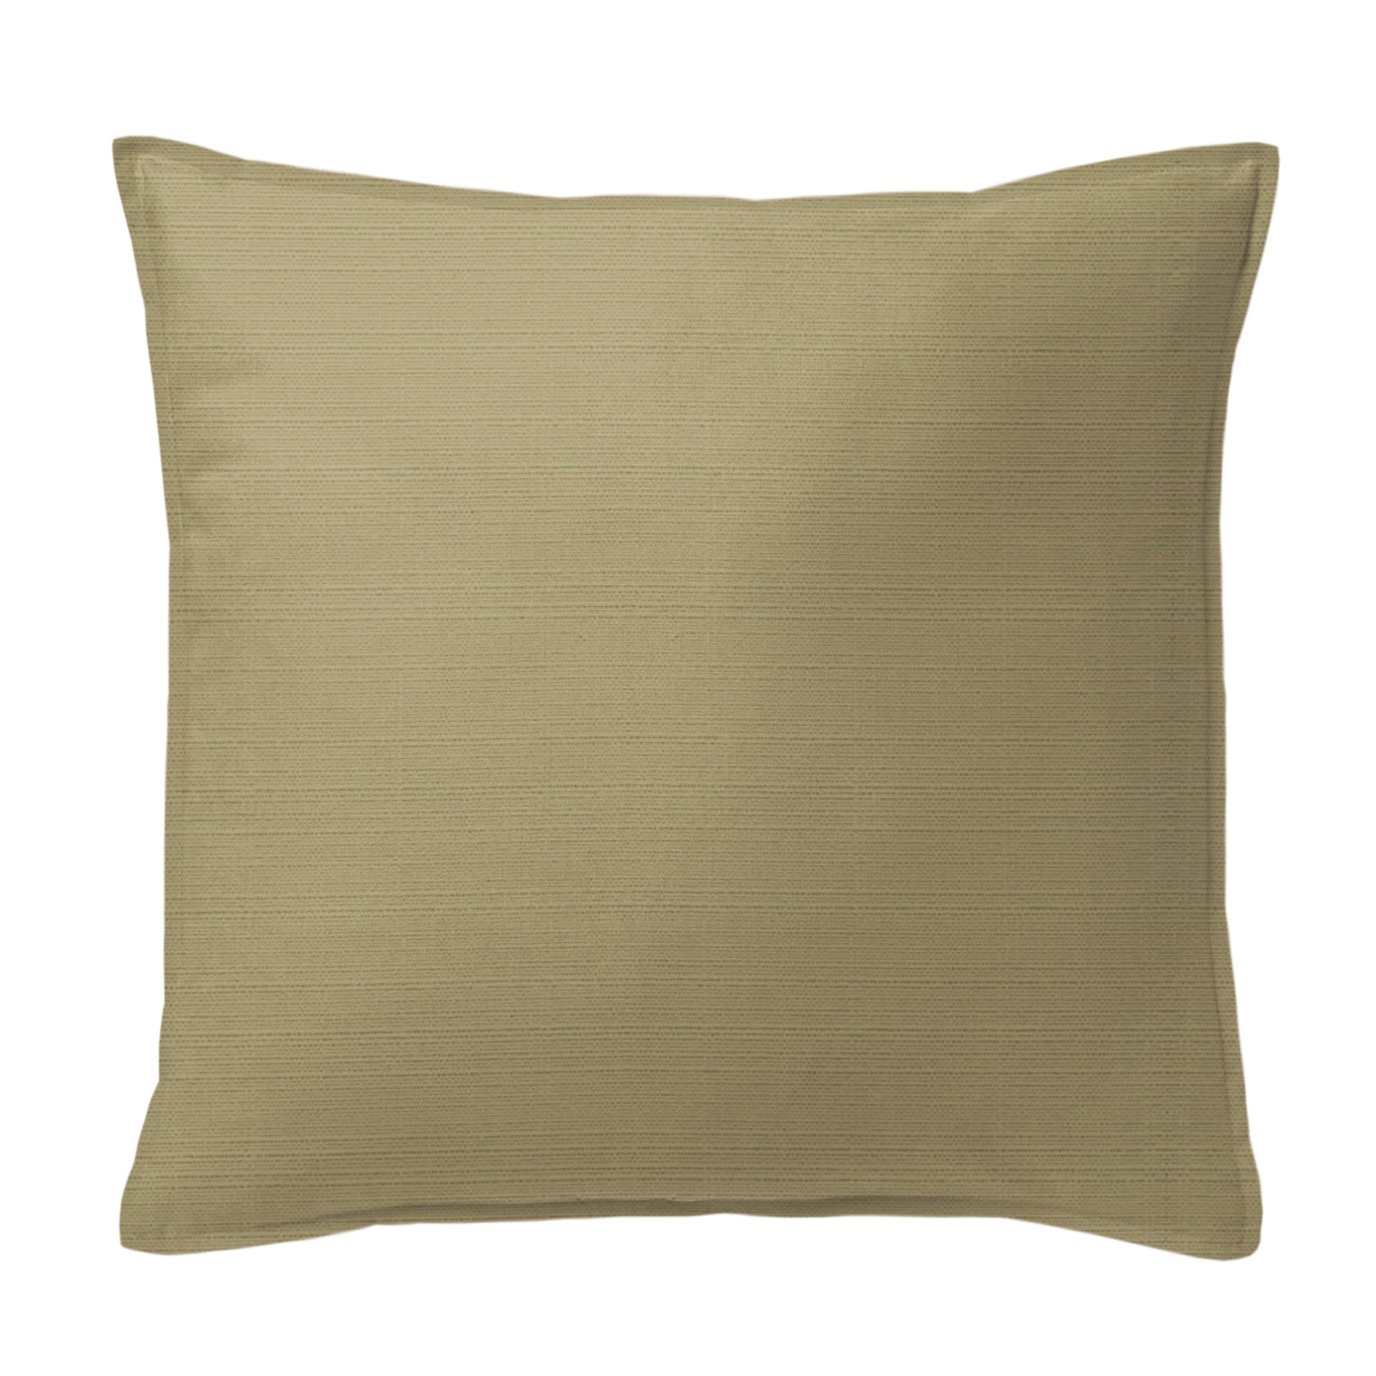 Nova Gold Decorative Pillow - Size 24" Square